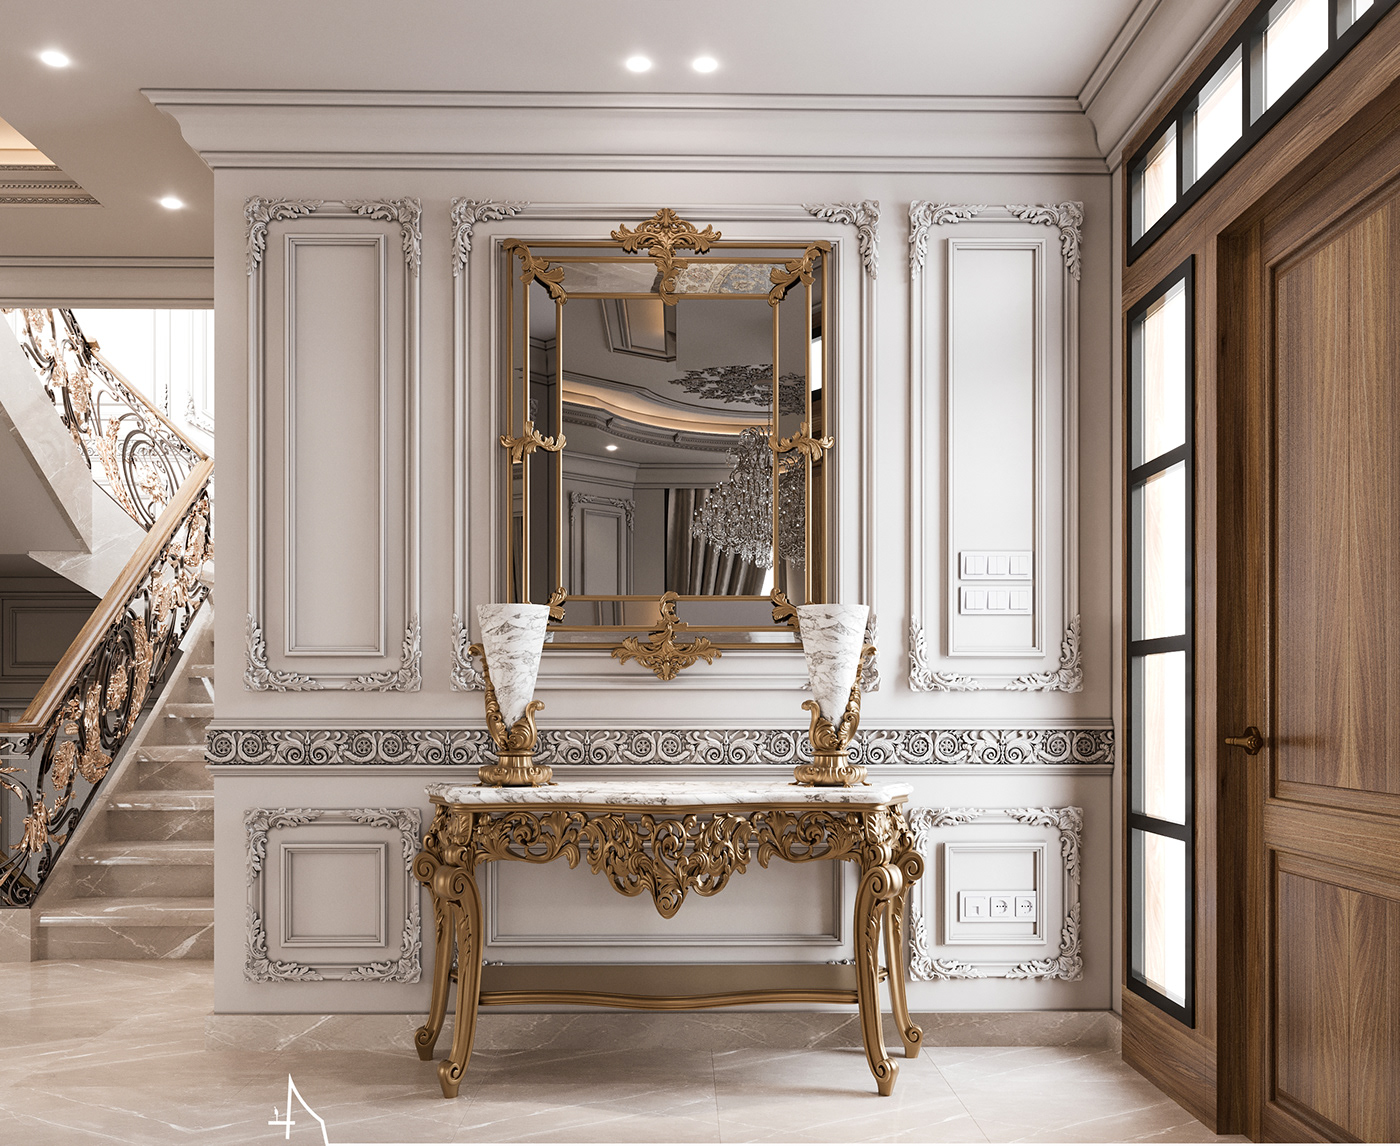 Classic interior design  luxury Interior design home decor architecture archviz reception cairo